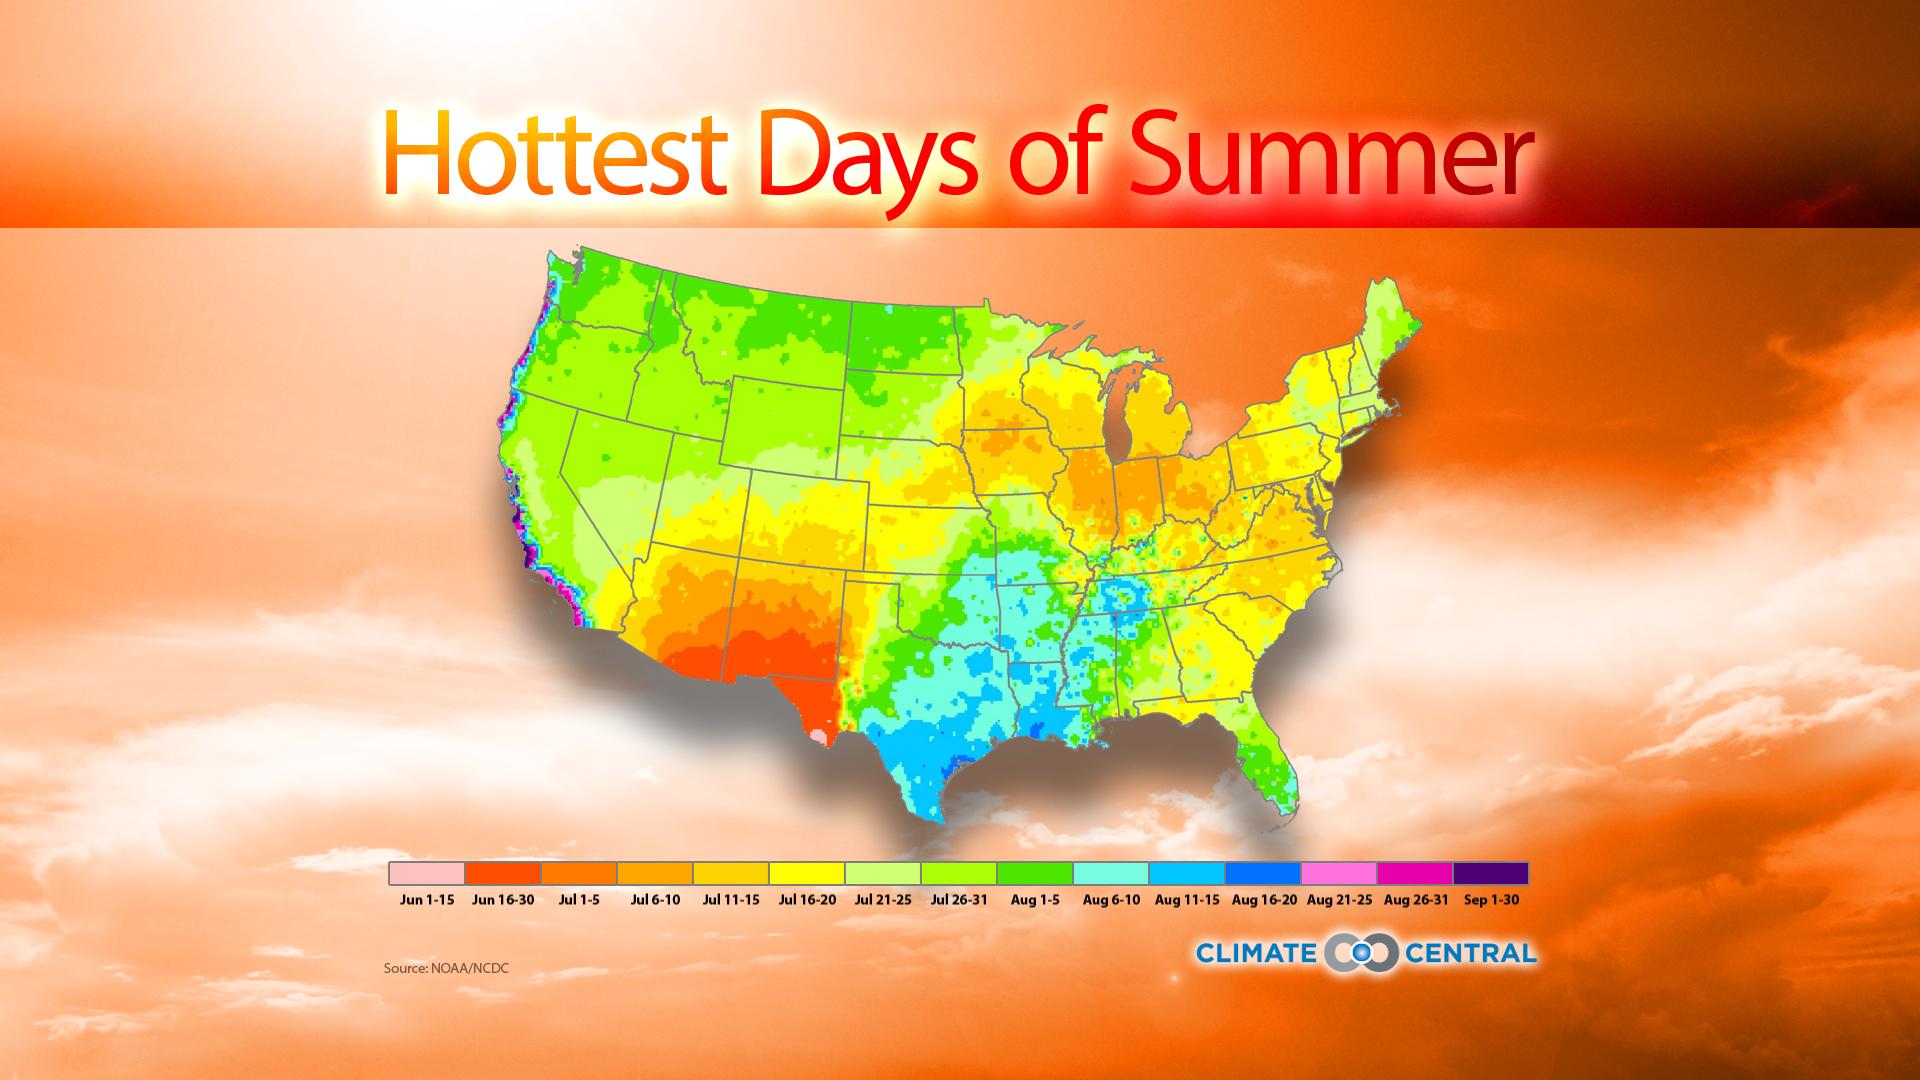 Set 3 - Hottest Days of Summer